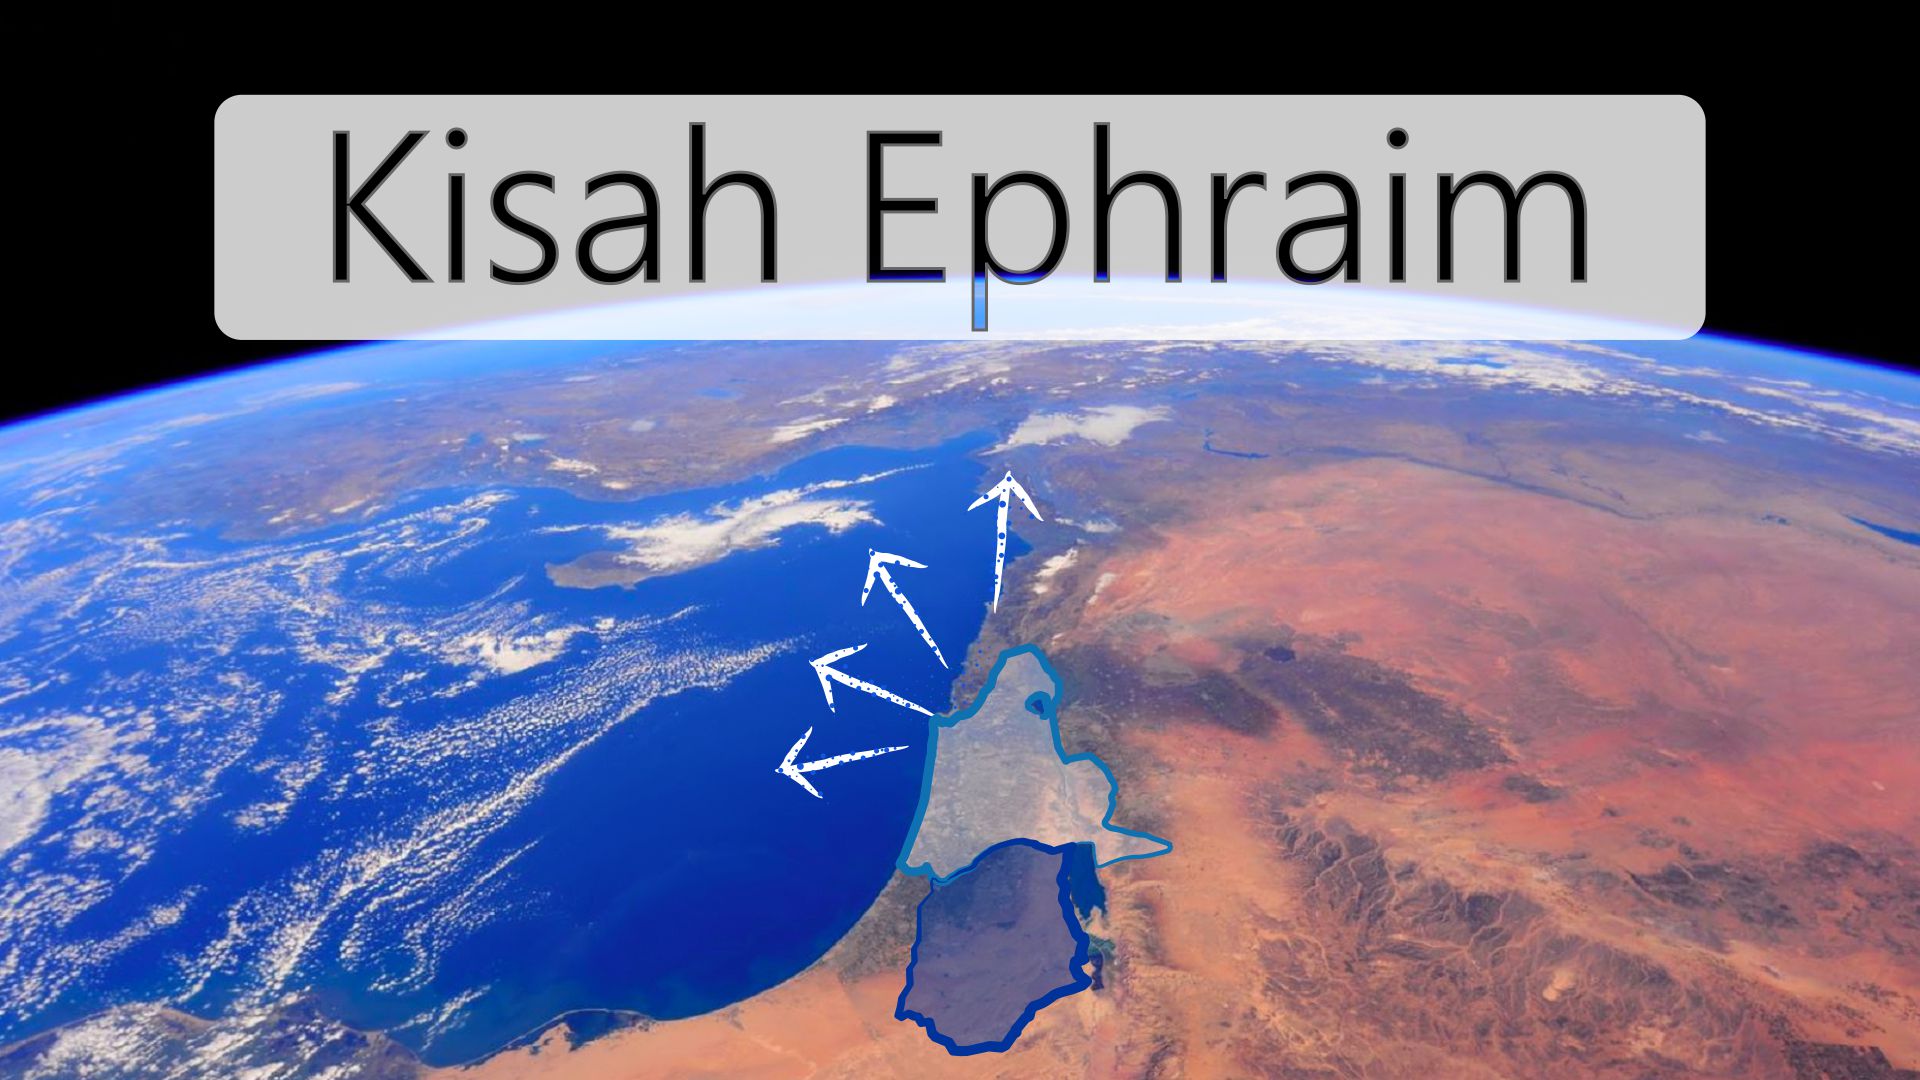 Kisah Ephraim (Sedang berlangsung)